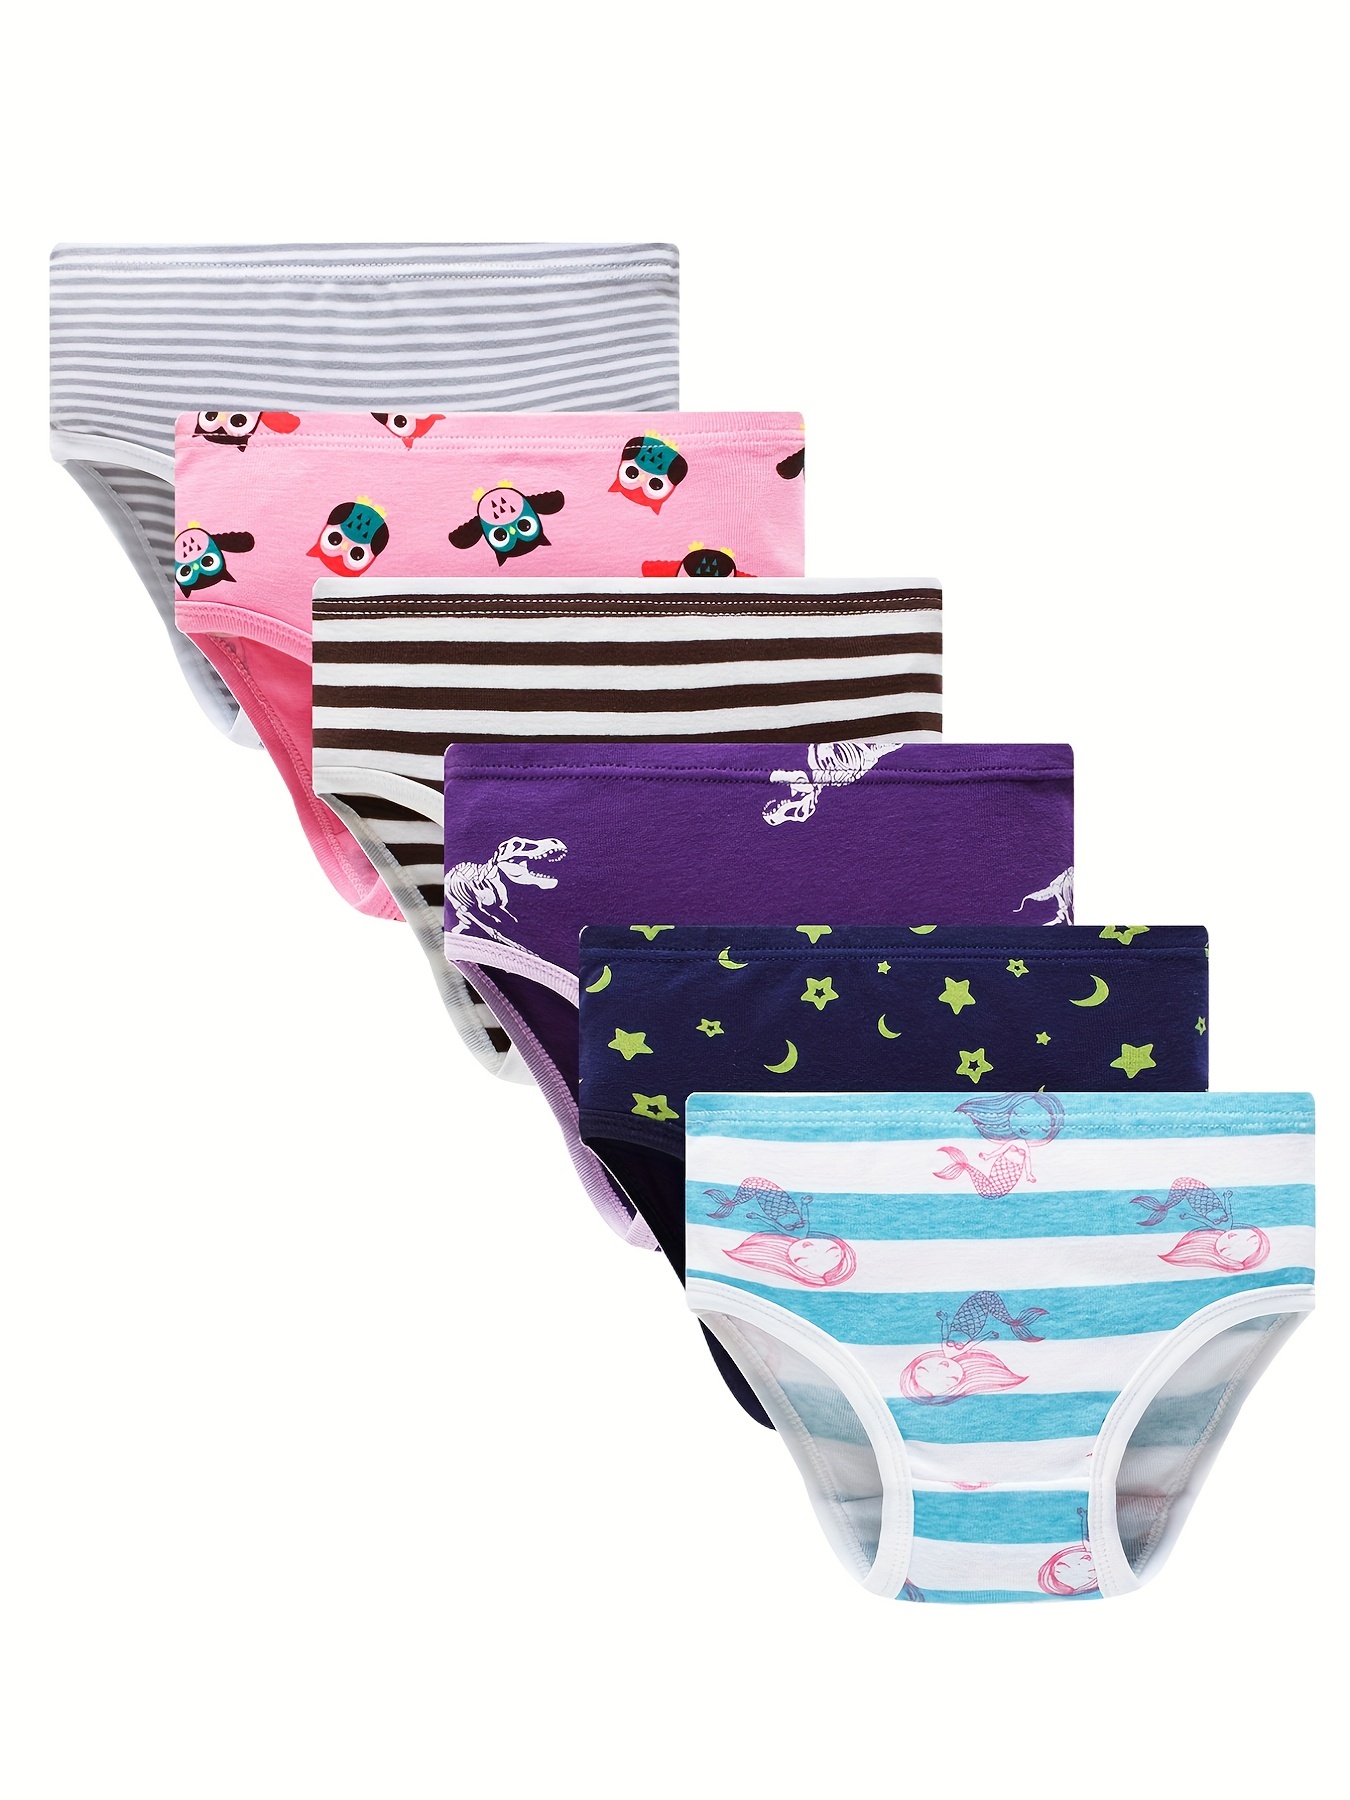 Best Deal for KikizYe Soft Cotton underwear Big Girls Panties